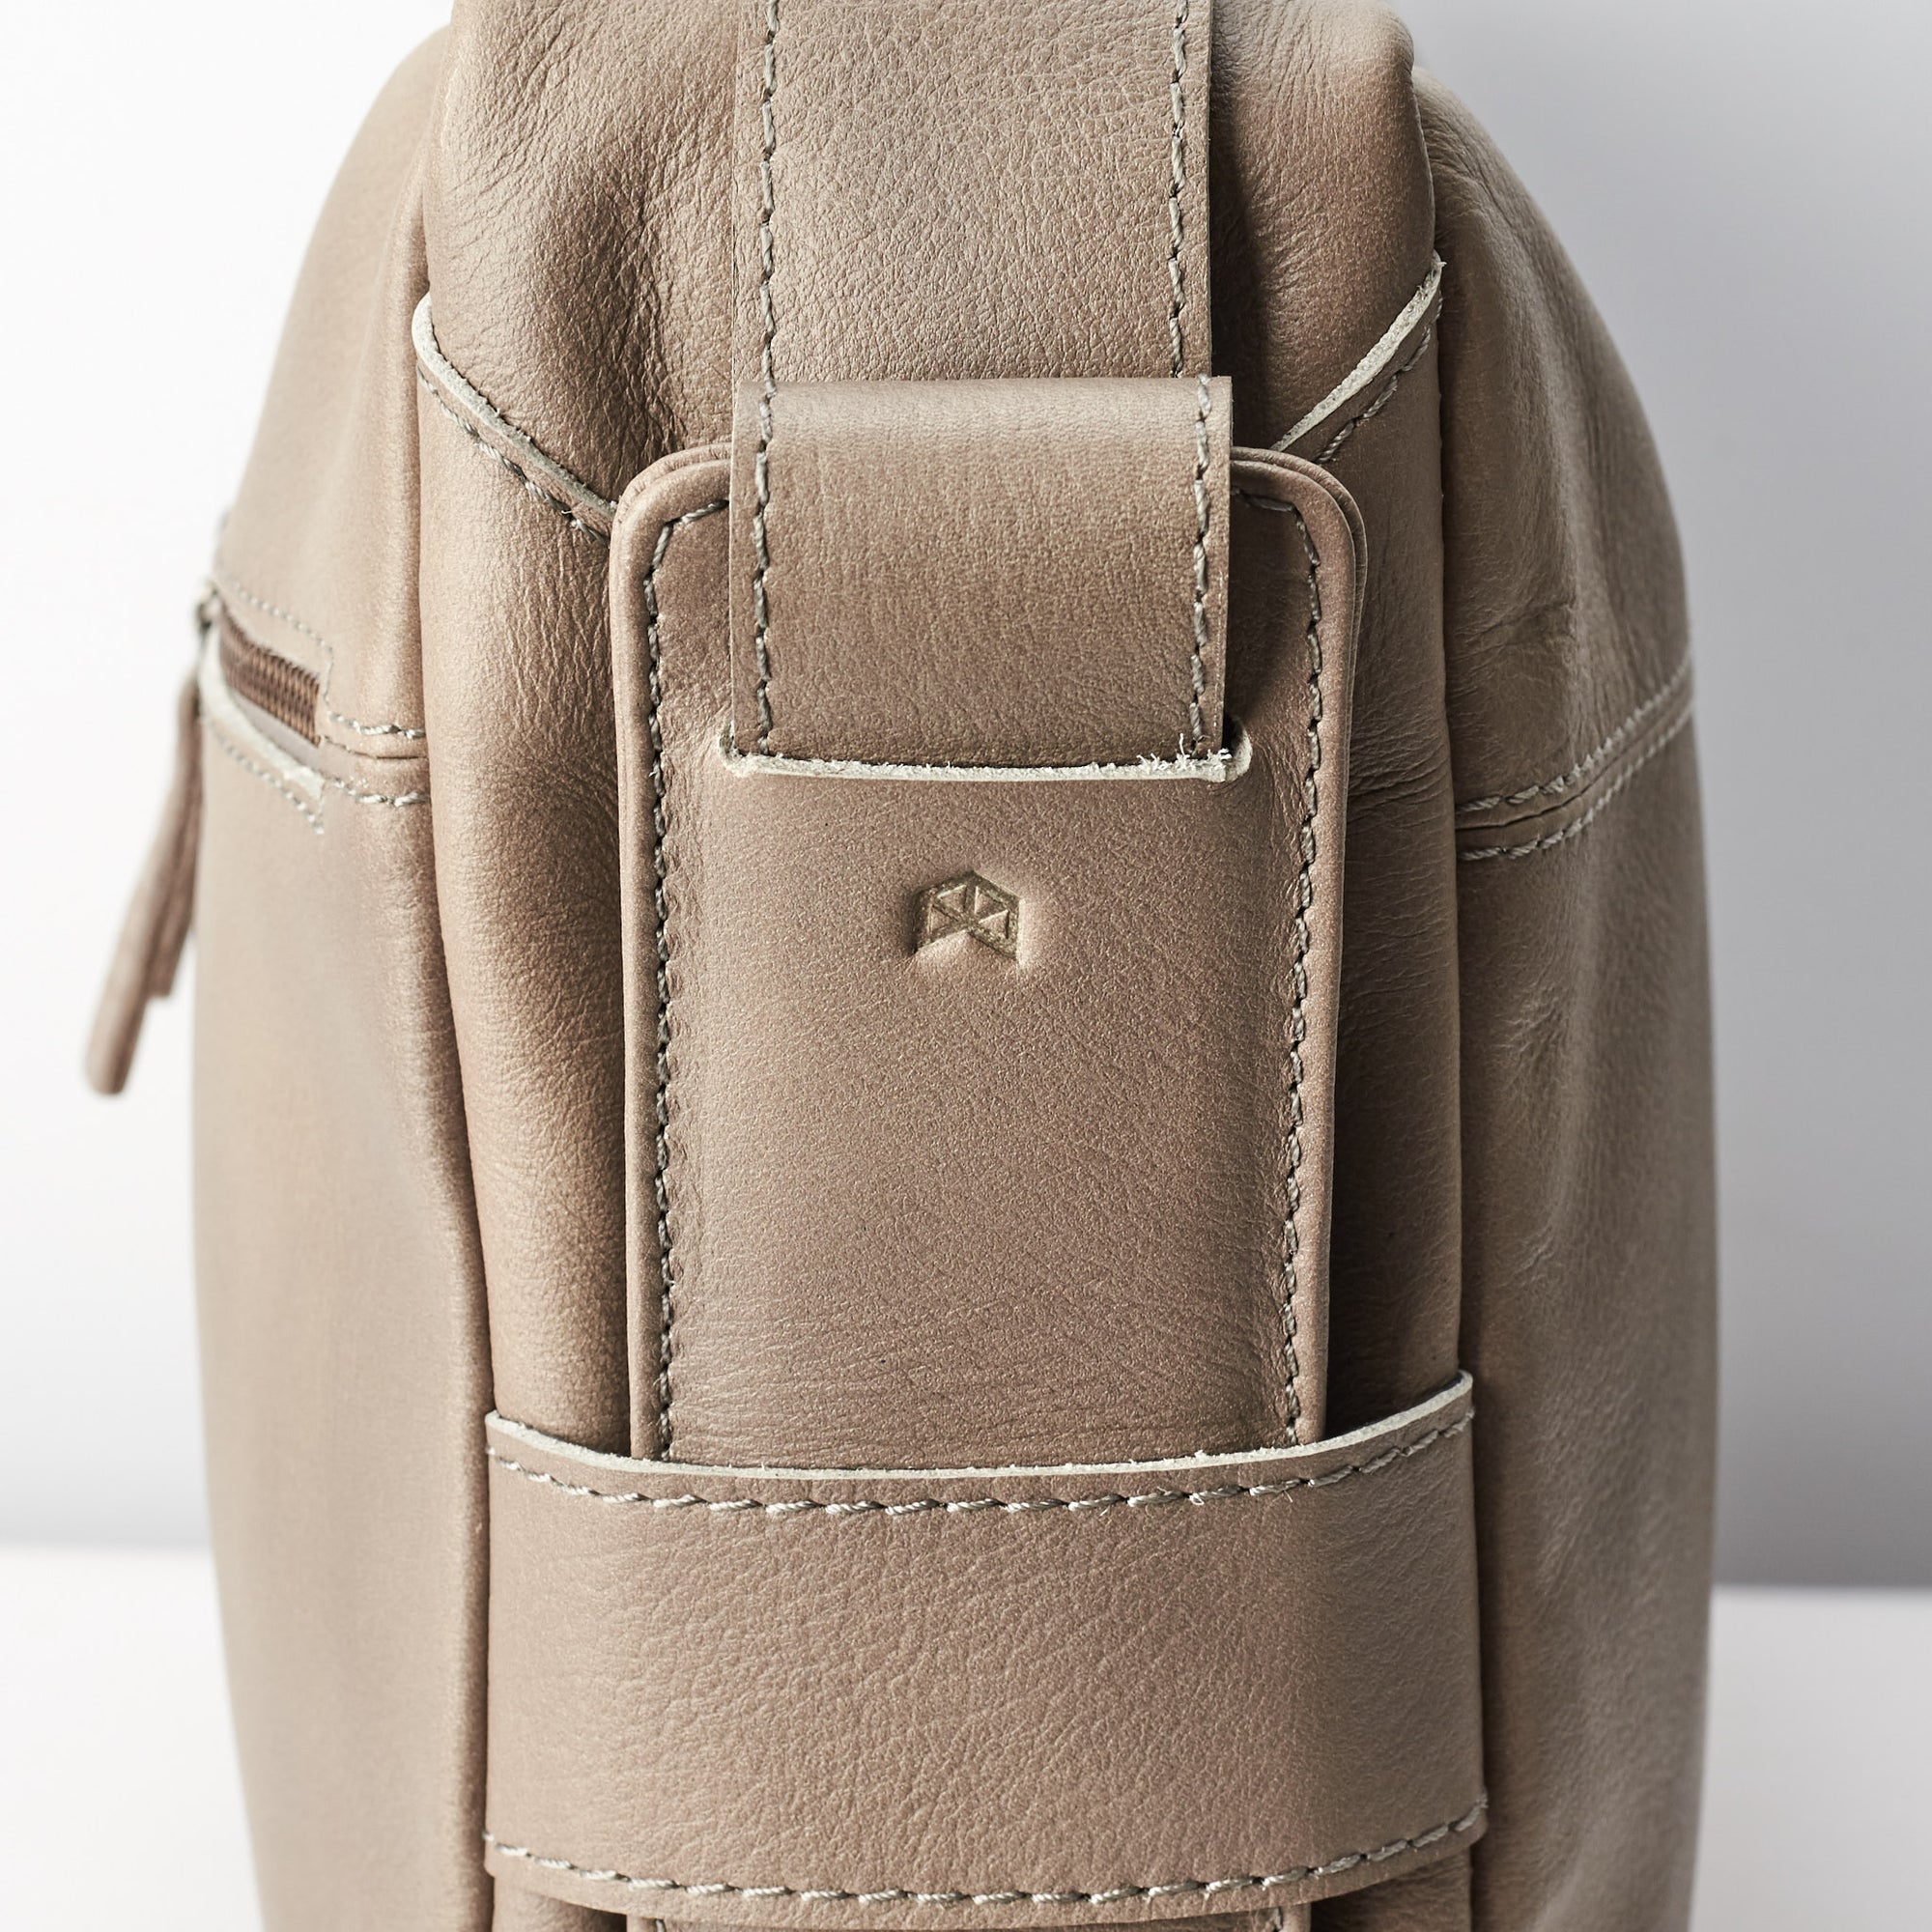 Extra padded shoulder strap. Grey handmade leather messenger bag for Men by Capra Leather. Macbook Pro 13 inch 15 inch leather bag. Unique mens bag 